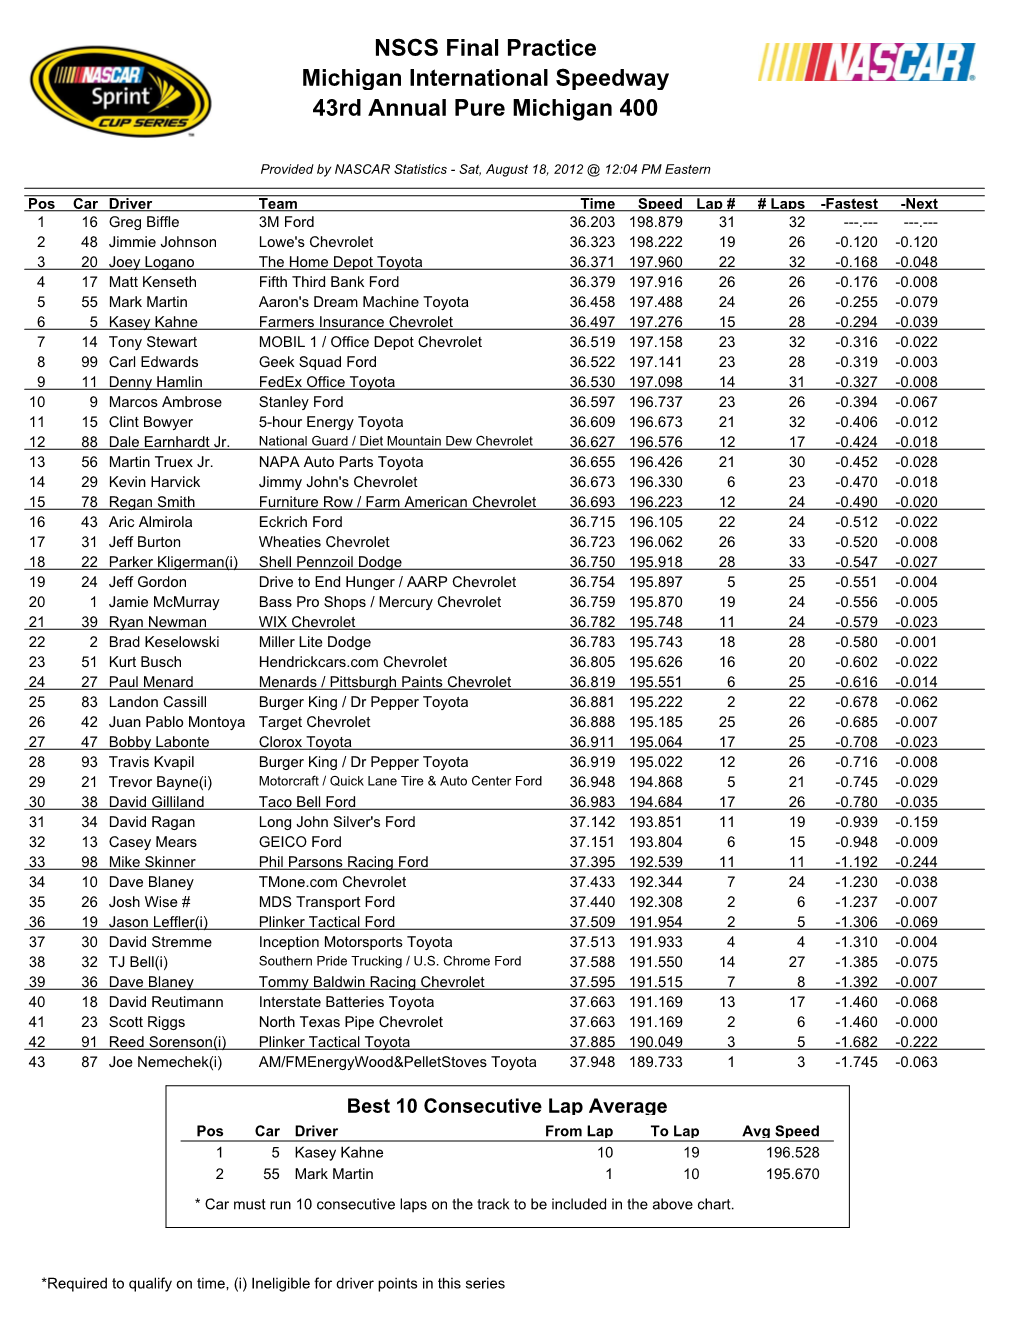 NSCS Final Practice Michigan International Speedway 43Rd Annual Pure Michigan 400